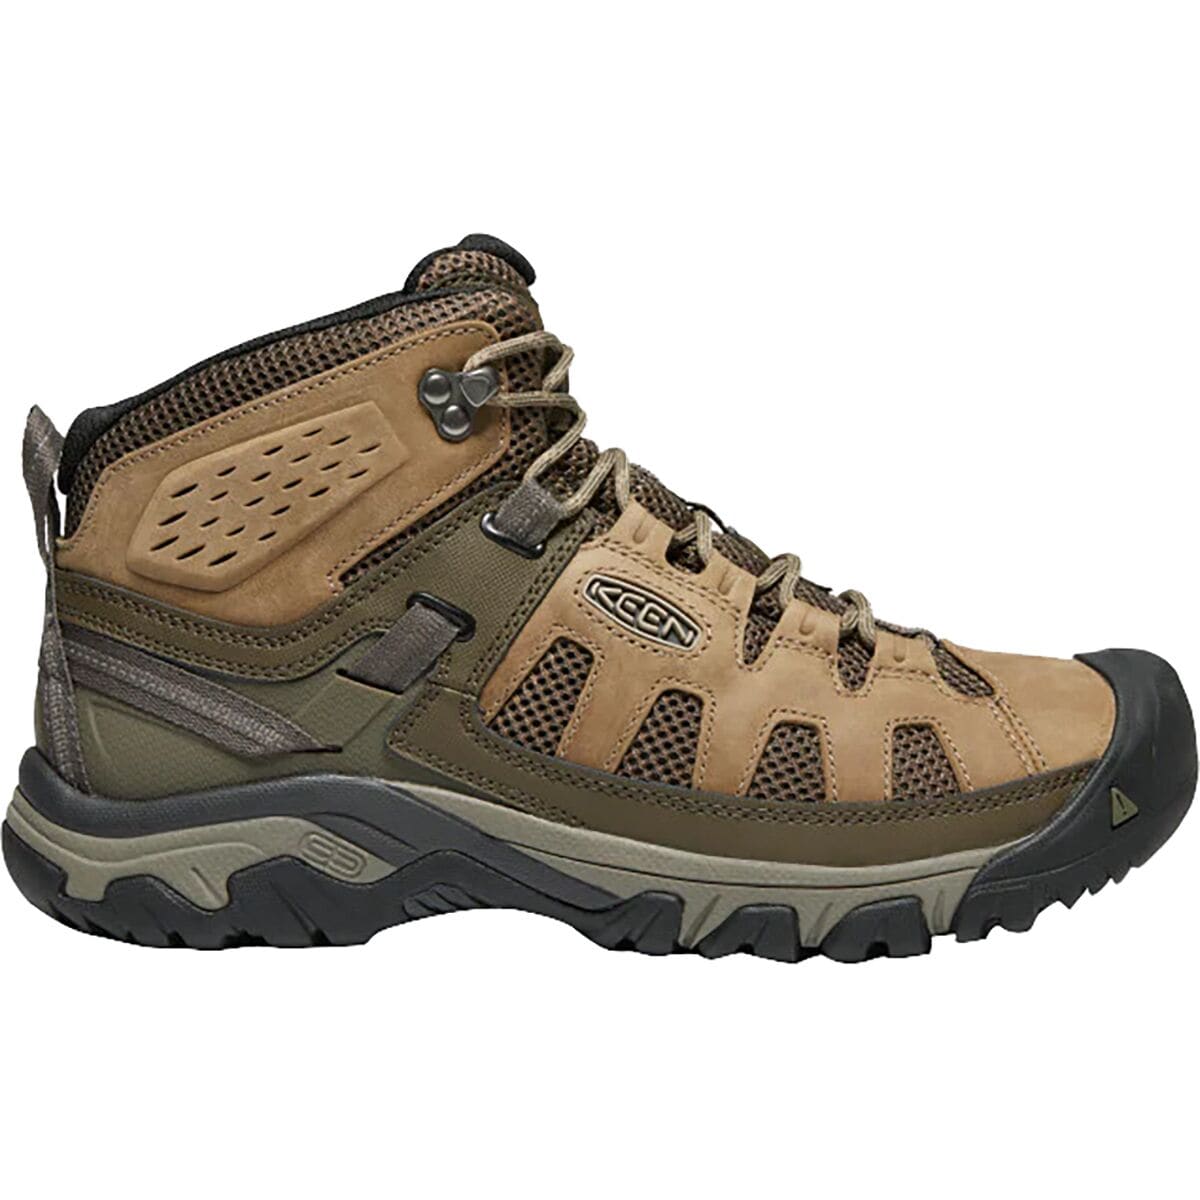 Targhee Vent Mid Hiking Boot - Men